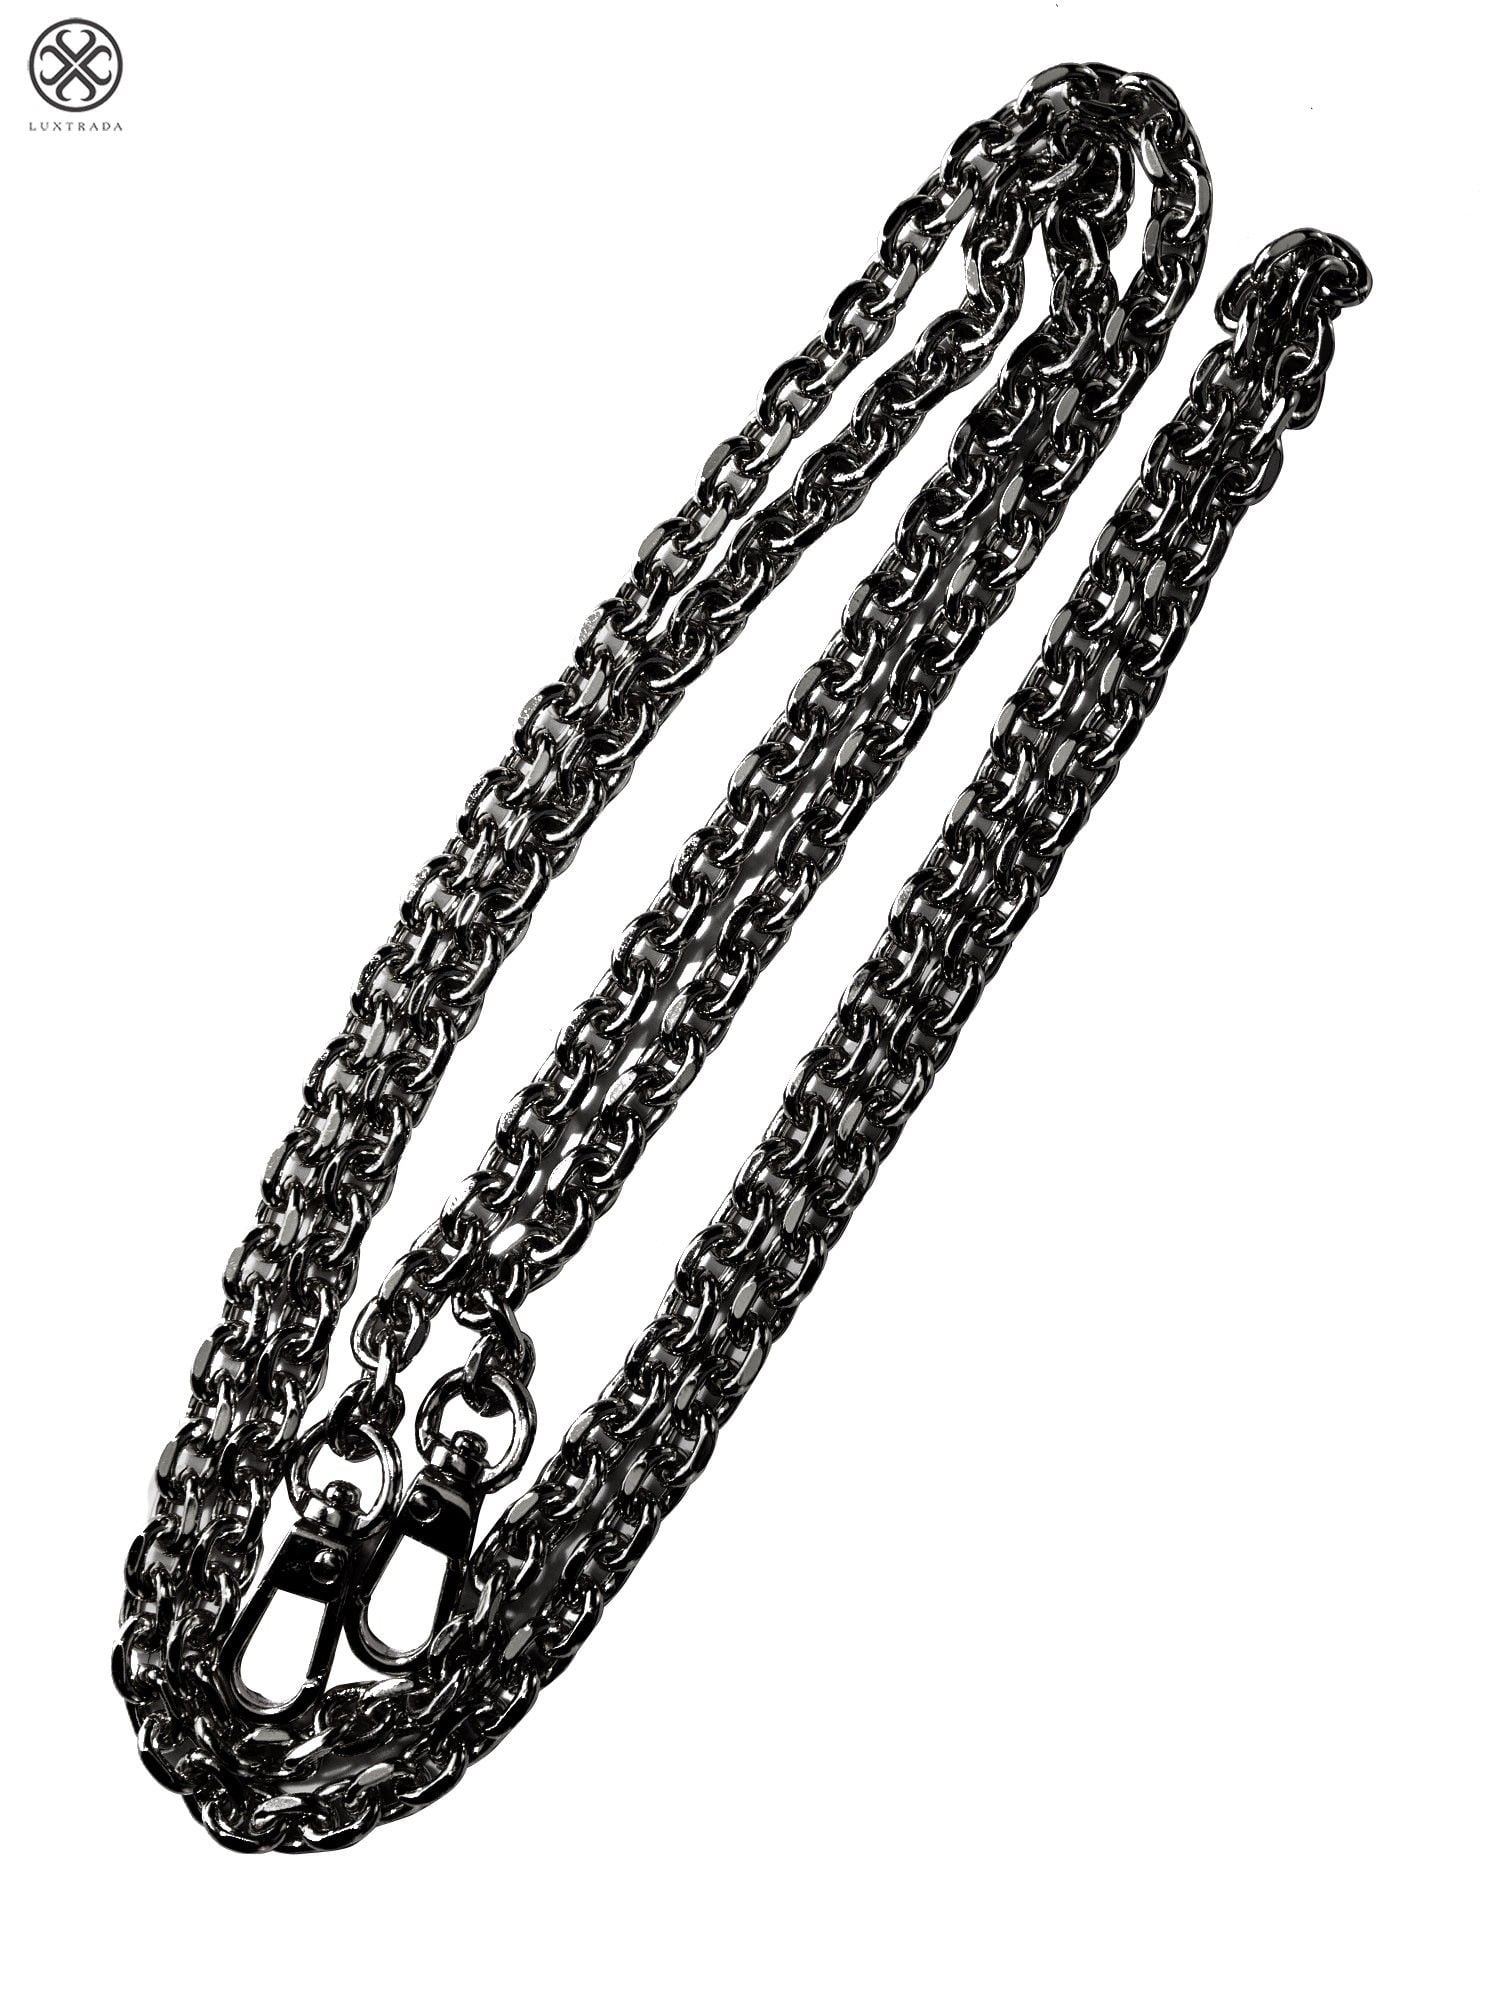  uxcell Purse Chain Strap, 47x0.22 Flat Chain Strap Handbag  Chains Accessories Purse Straps Shoulder Cross Body Replacement Strap, Gold  Tone